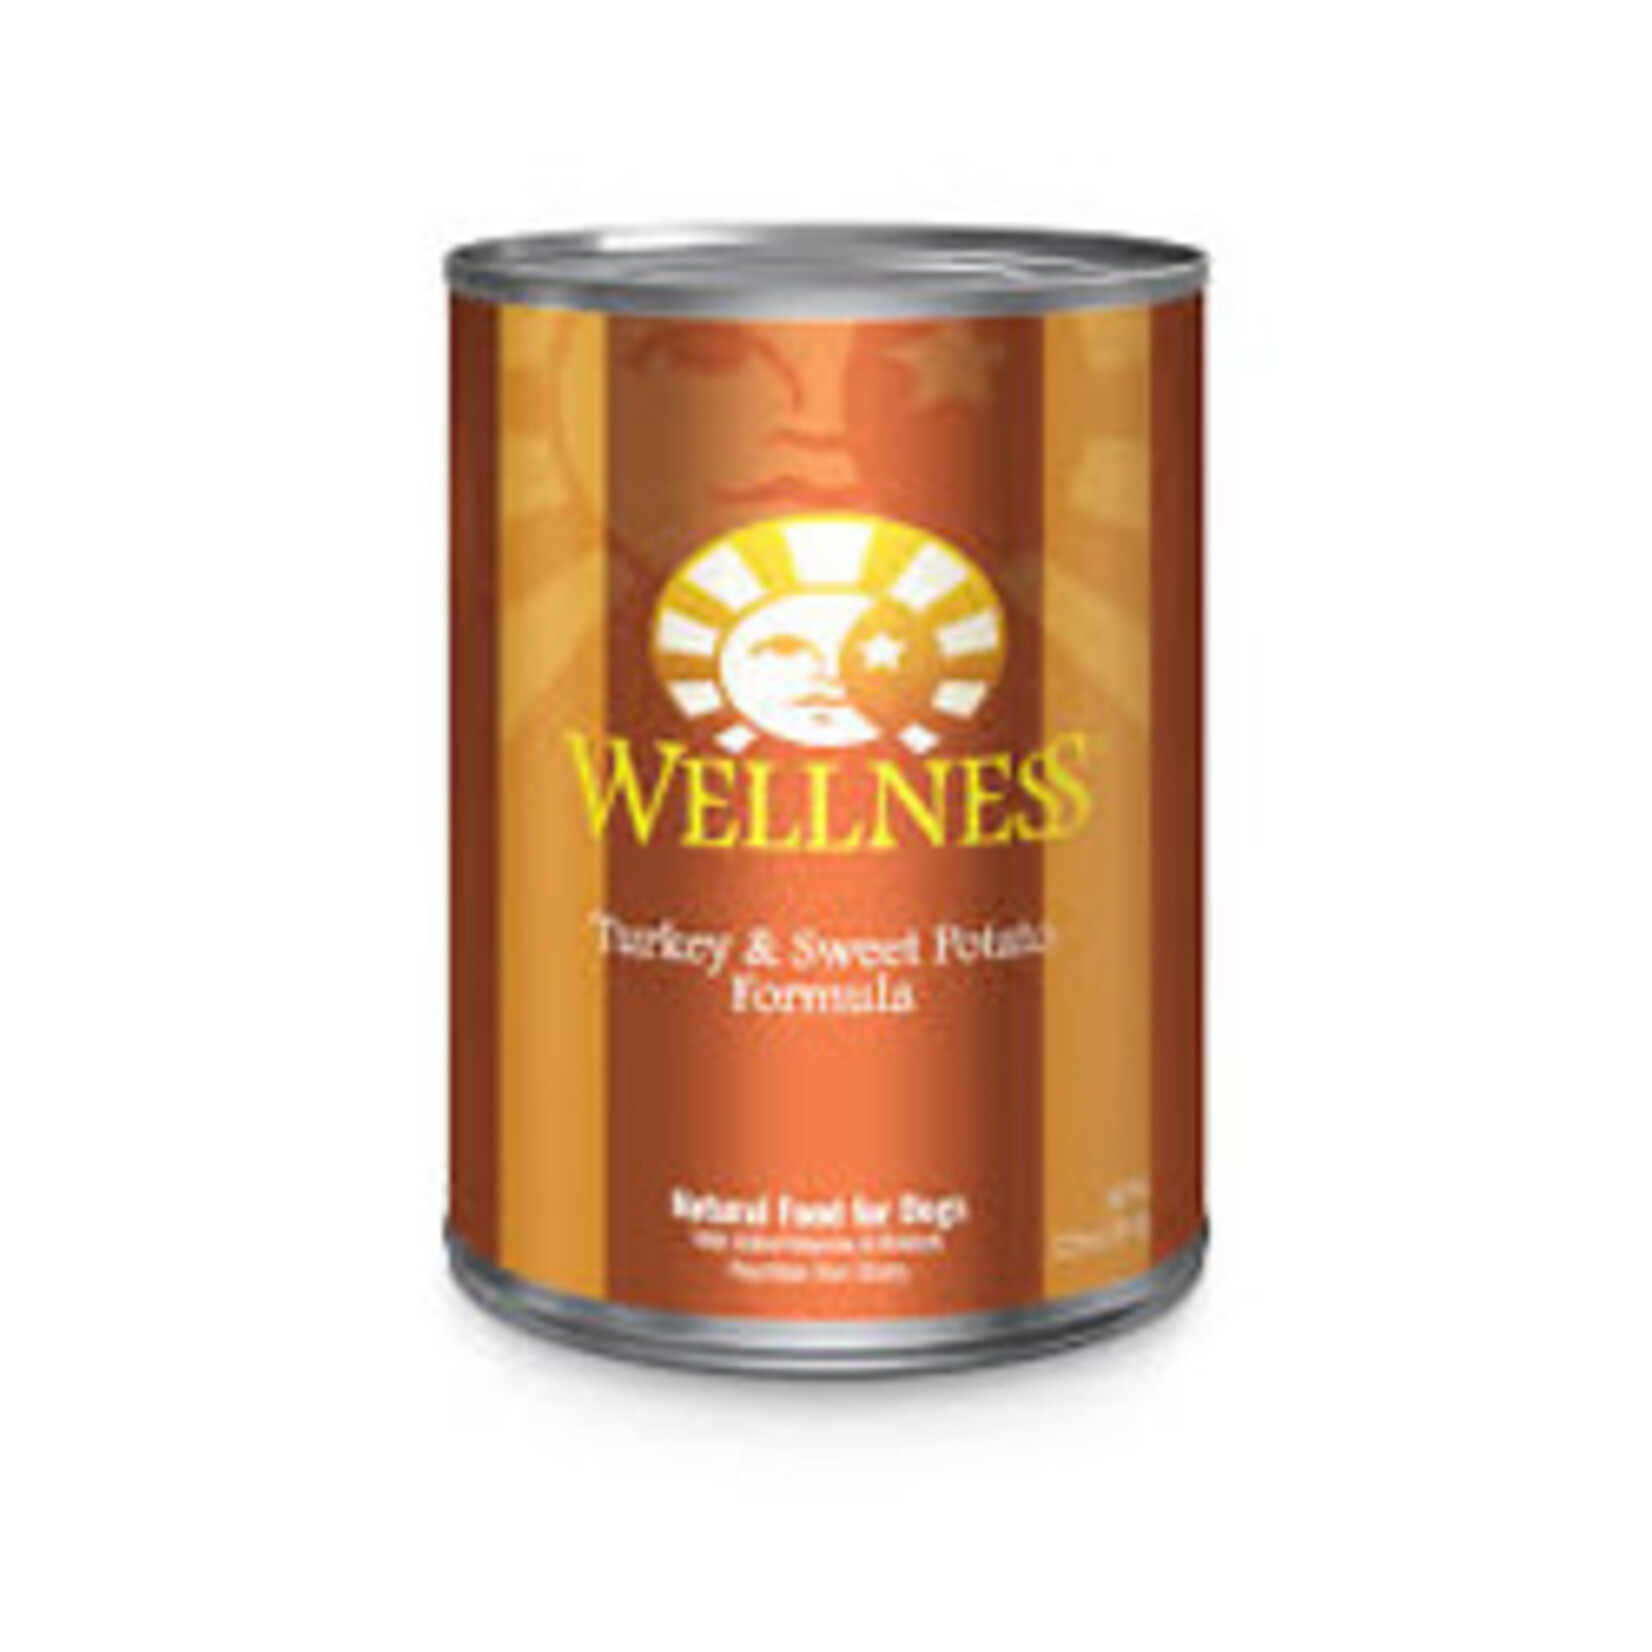 Wellness Wellness Complete Health 12.5oz Canned Dog Food